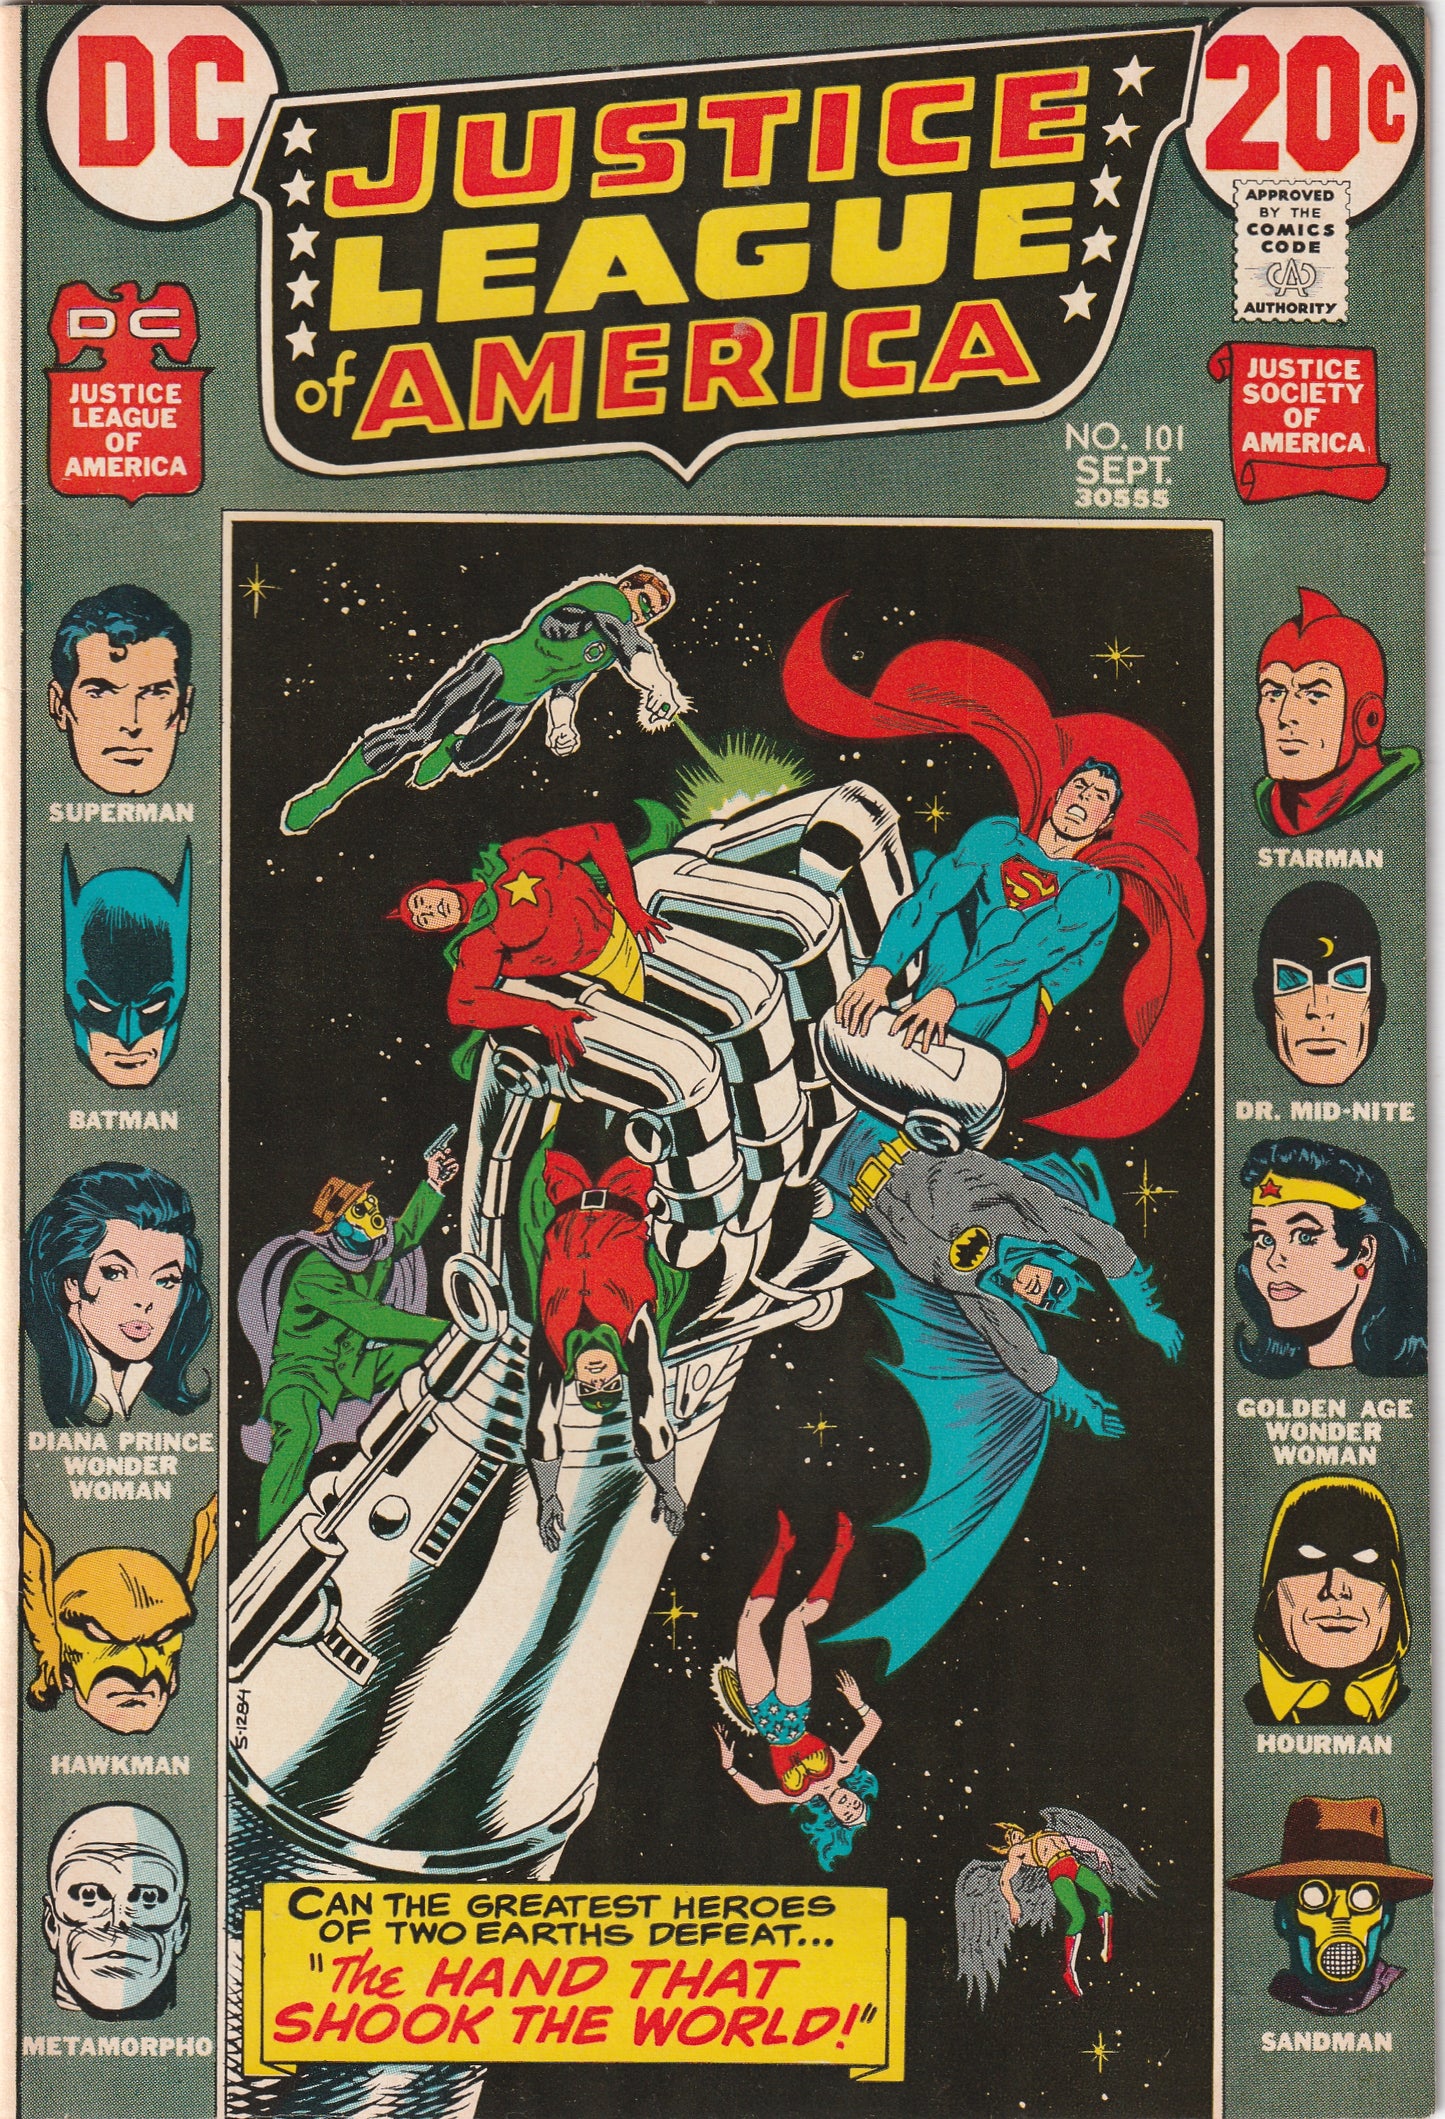 Justice League of America #101 (1972) - JSA crossover